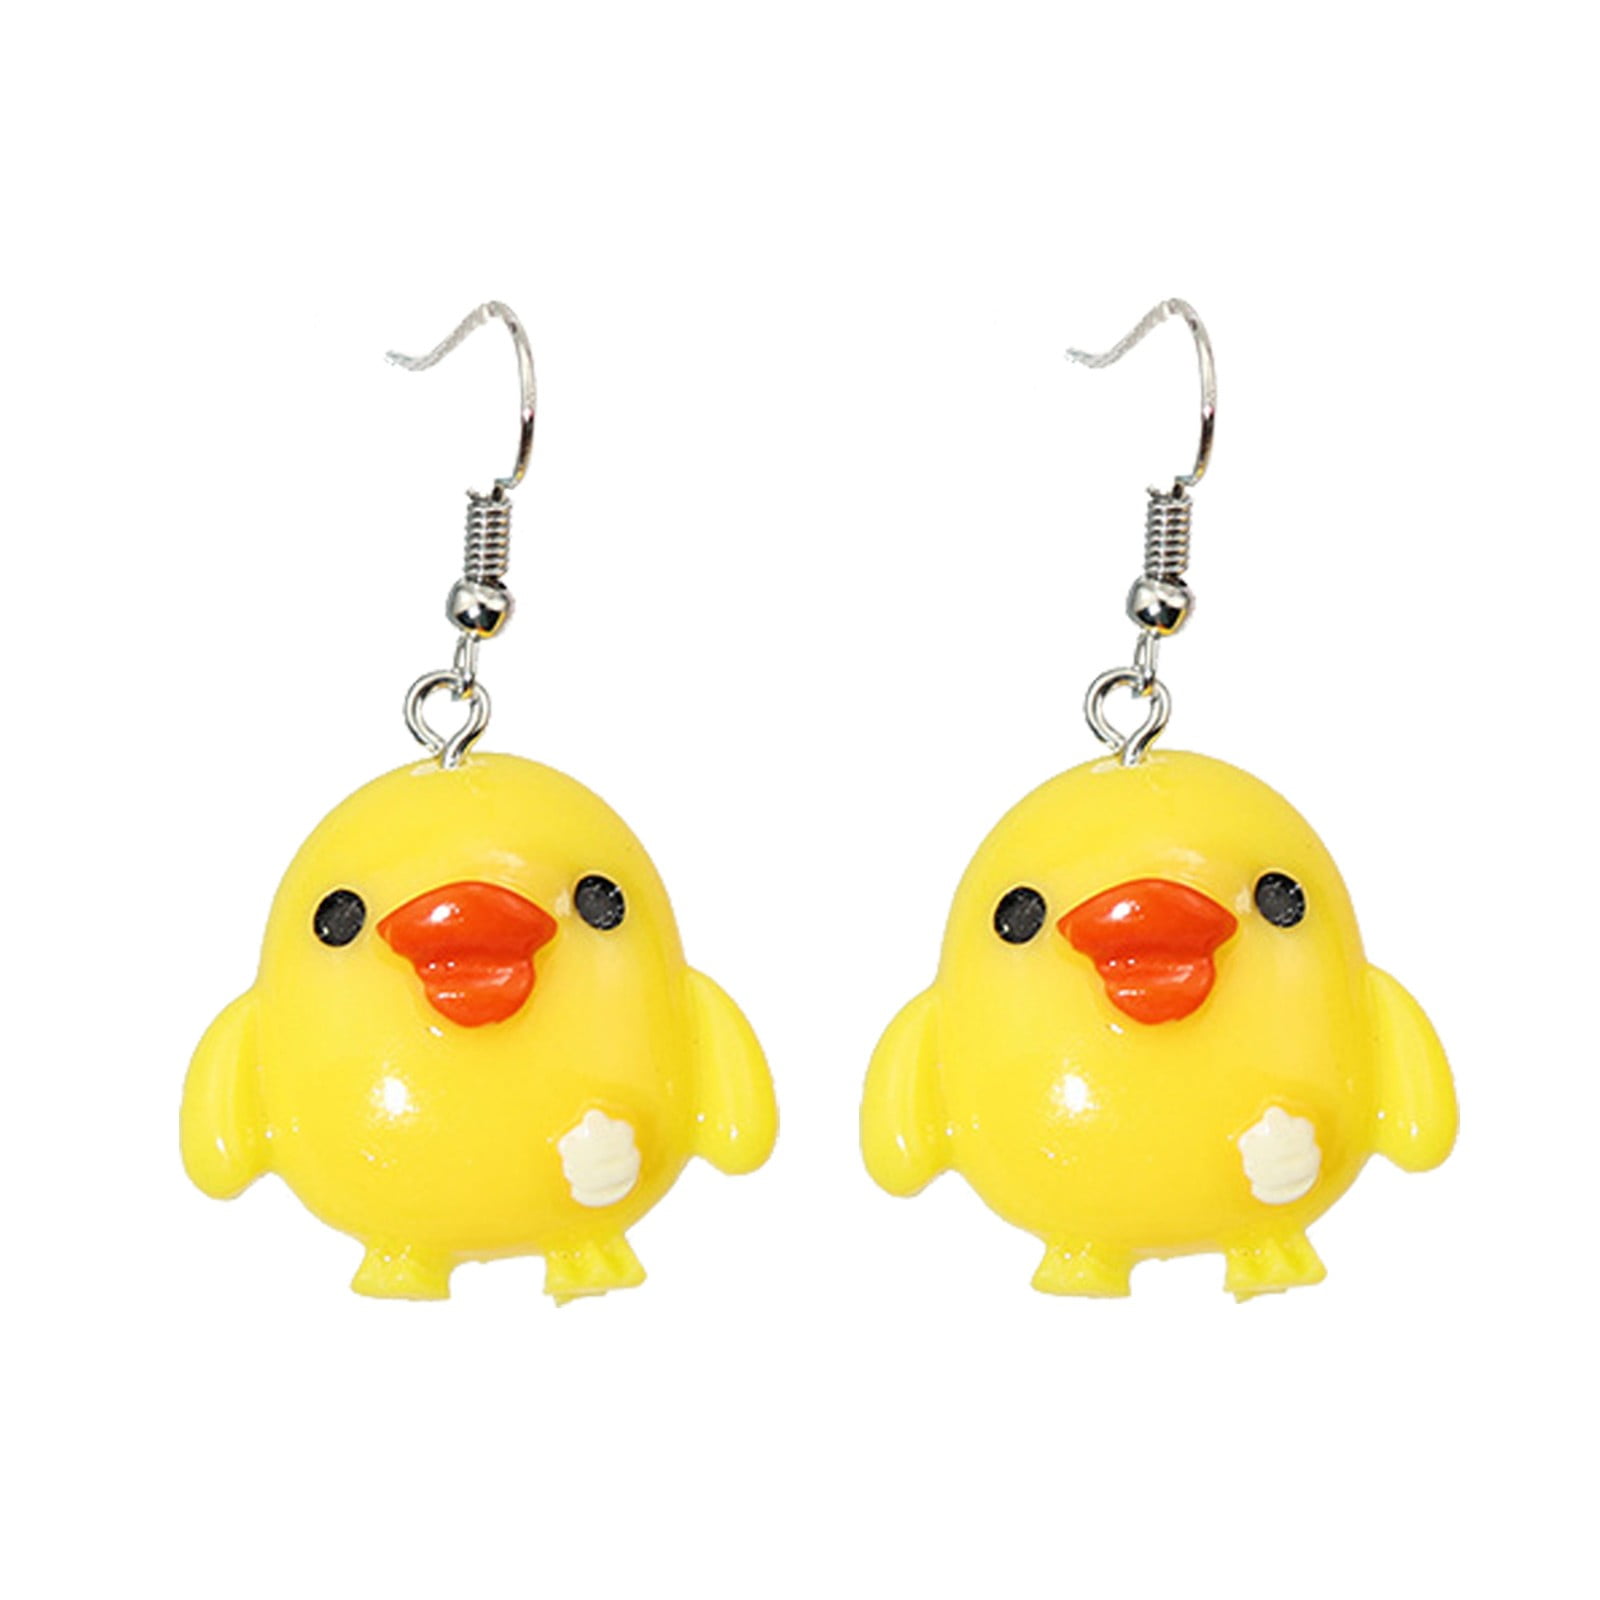 Yellow Rubber Duck Earring, Miniature Rubber Ducky Dangles, Kawaii, Cute, Animal Earrings